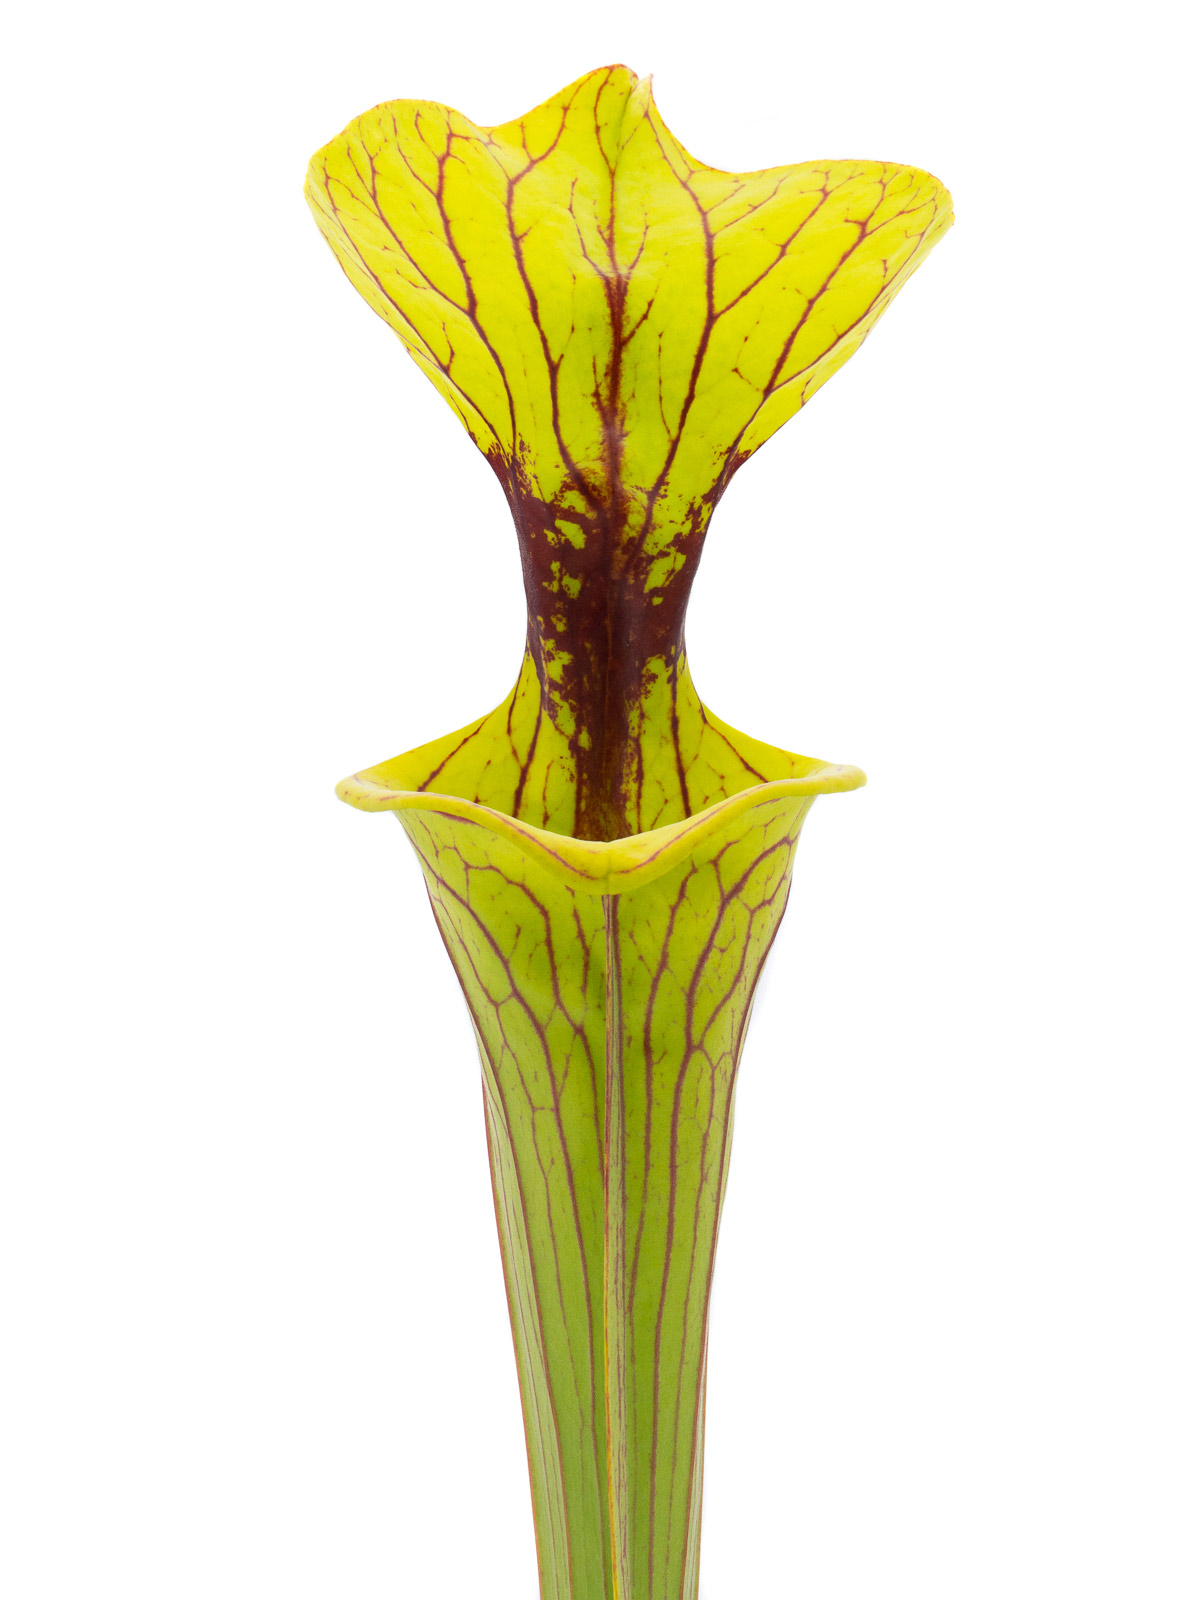 Sarracenia flava var. ornata - MK F46, stocky form, Apalachicola National Forest, Florida